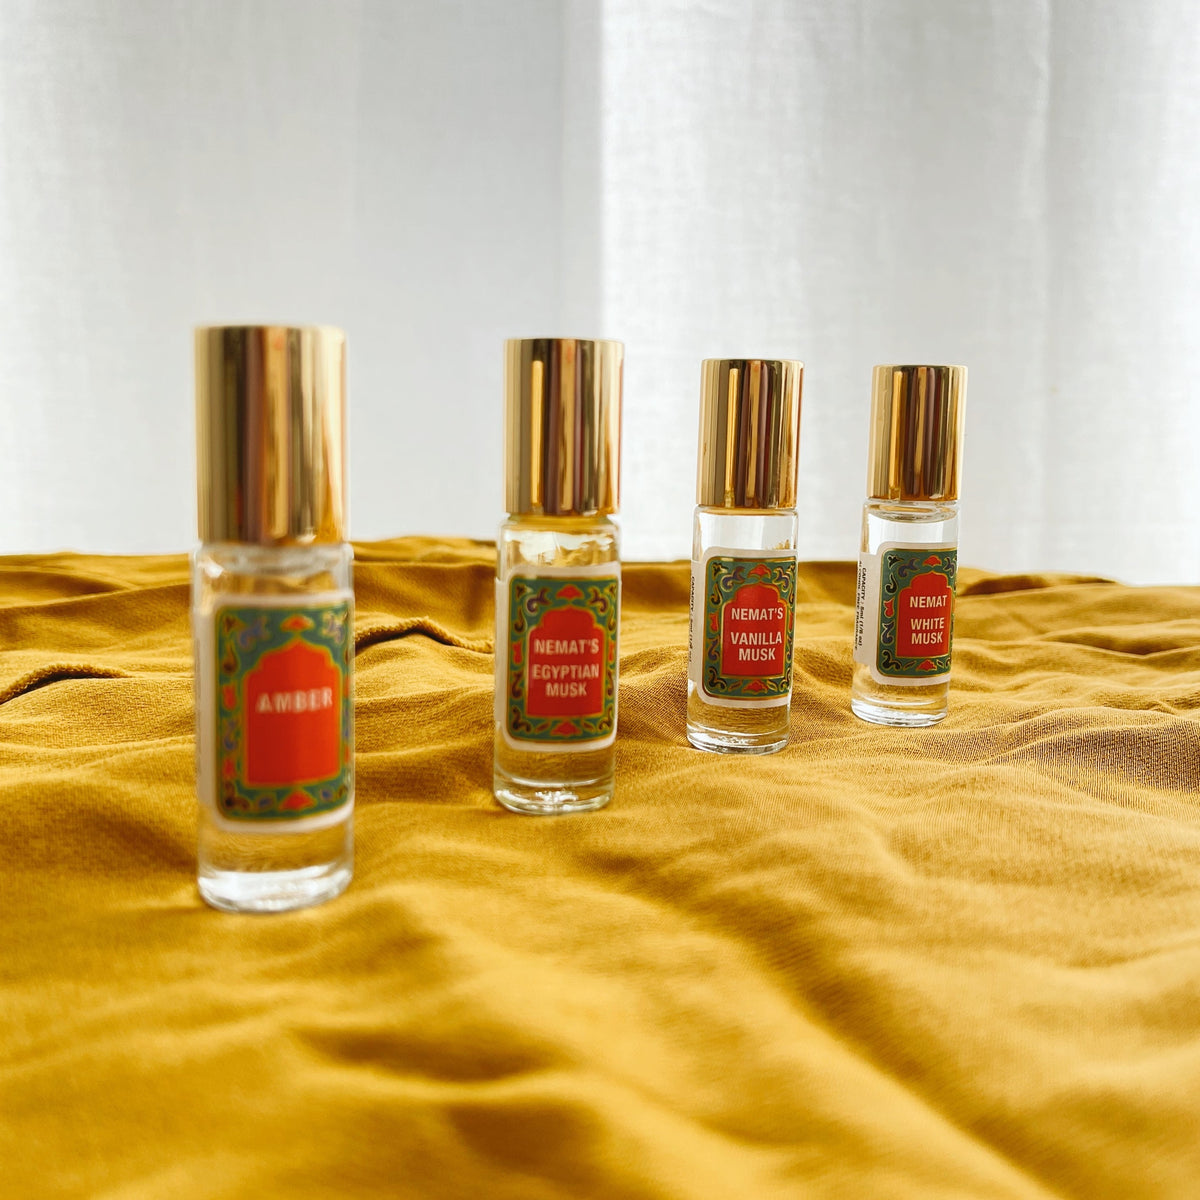 Nemat Perfume Oil that went viral💕 Vanilla Musk smells really